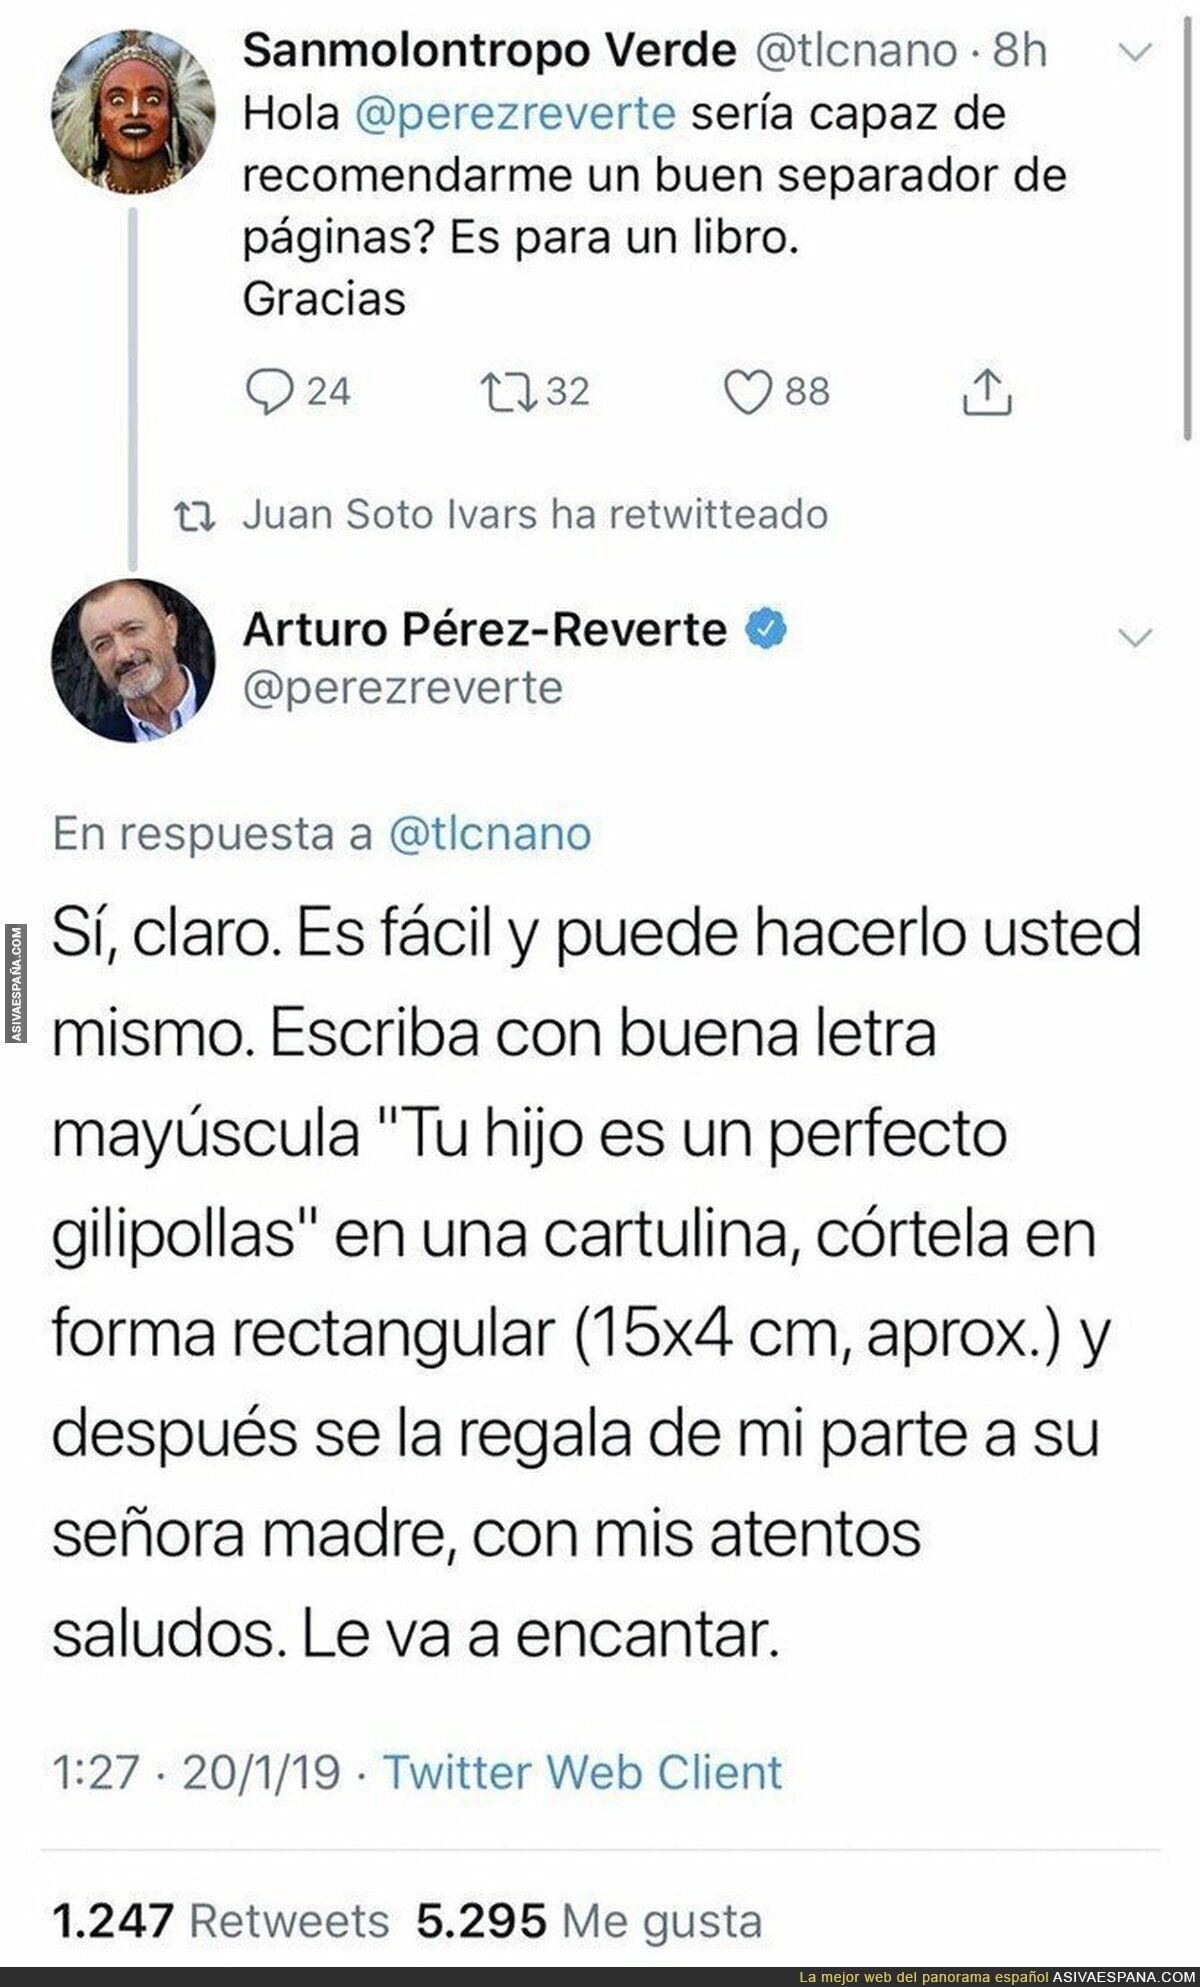 Arturo Pérez-Reverte recomendando un separador de páginas